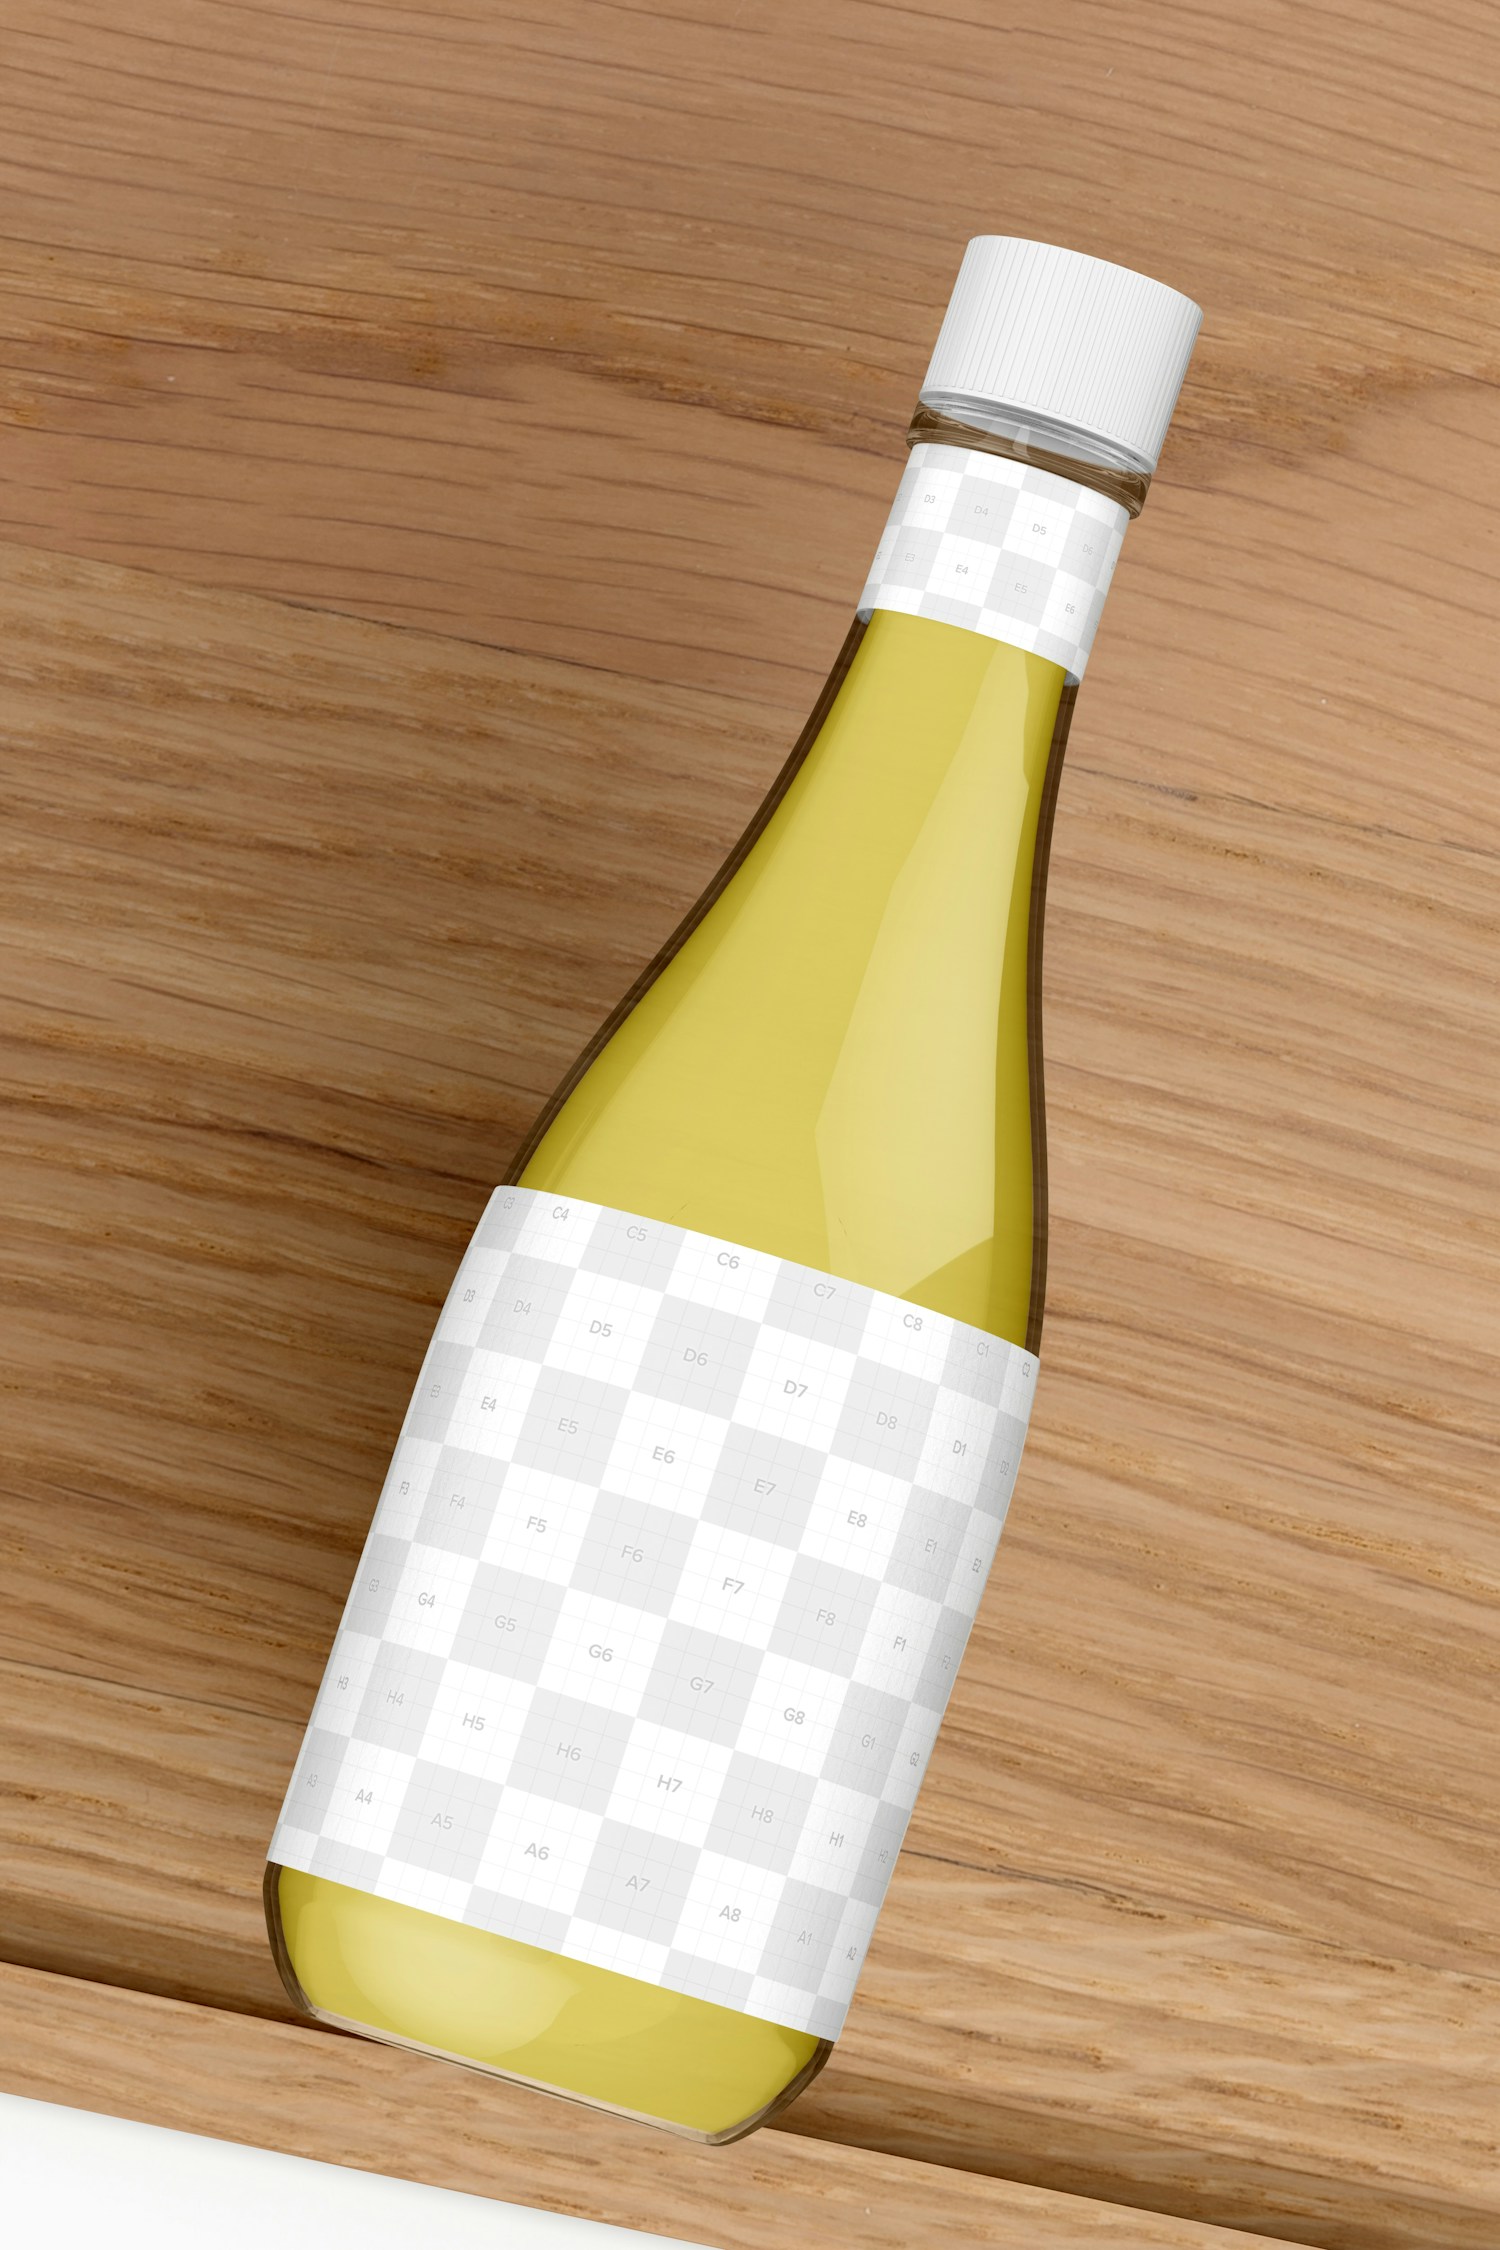 14.5 oz Lemon Vinaigrette Bottle Mockup, Top View